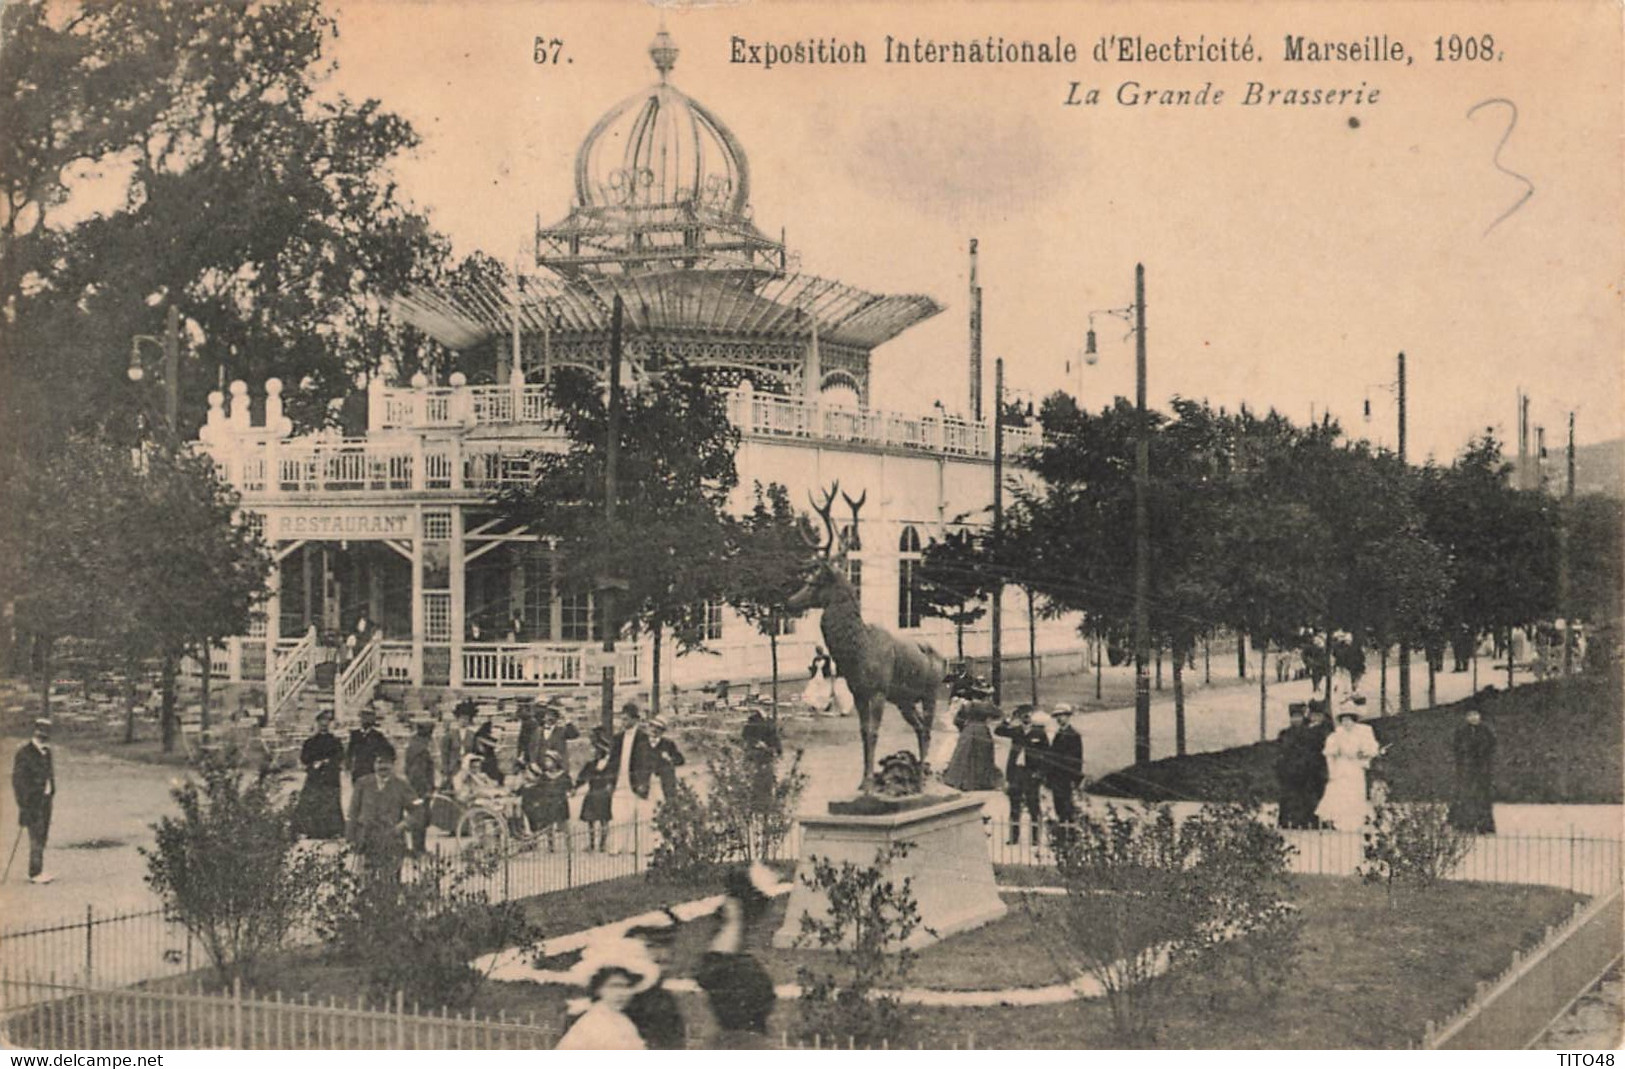 France (13 Marseille) - Exposition Internationale D'Electricité 1908 - La Grande Brasserie - Internationale Tentoonstelling Voor Elektriciteit En Andere